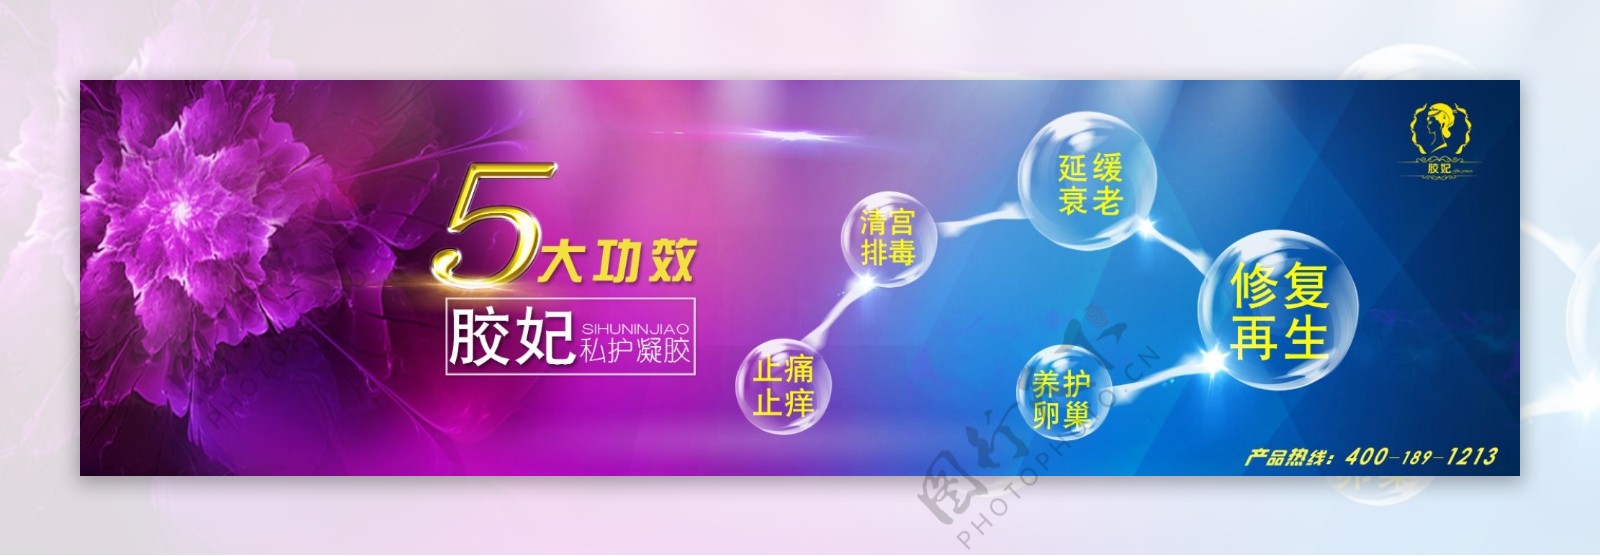 紫色系炫酷广告banner